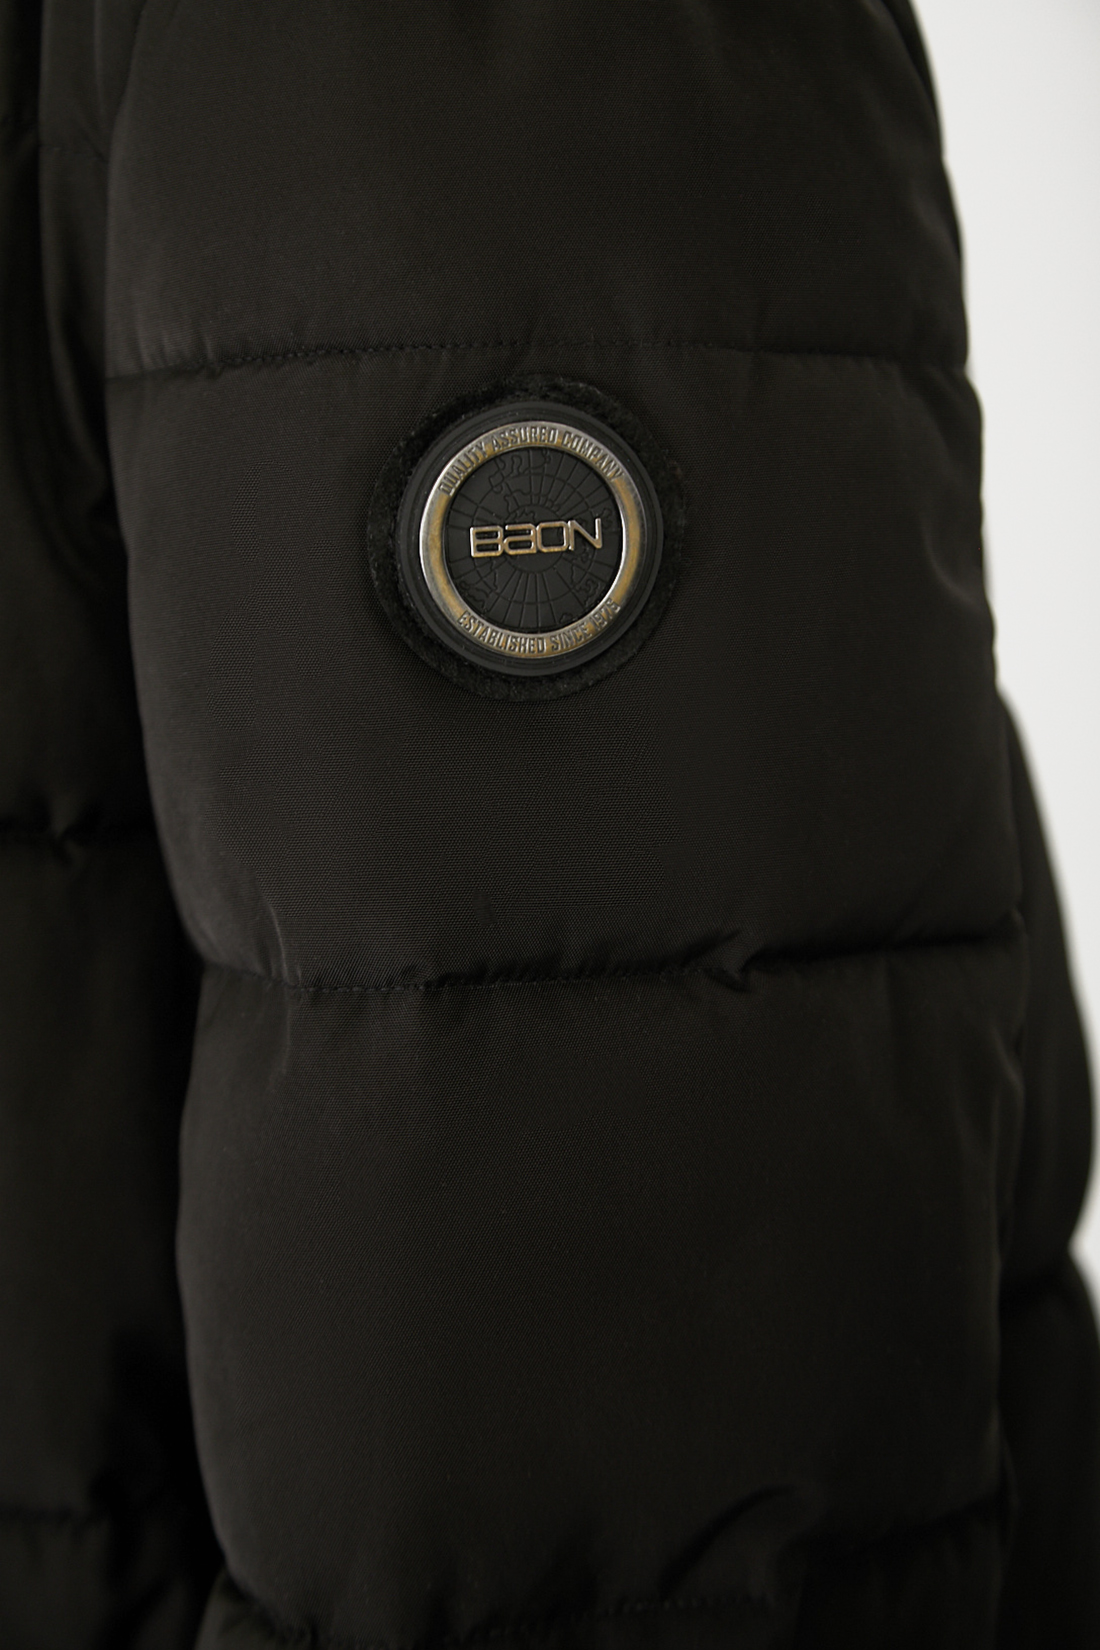 Куртка (Эко пух) (арт. baon B541506), размер S, цвет черный Куртка (Эко пух) (арт. baon B541506) - фото 3